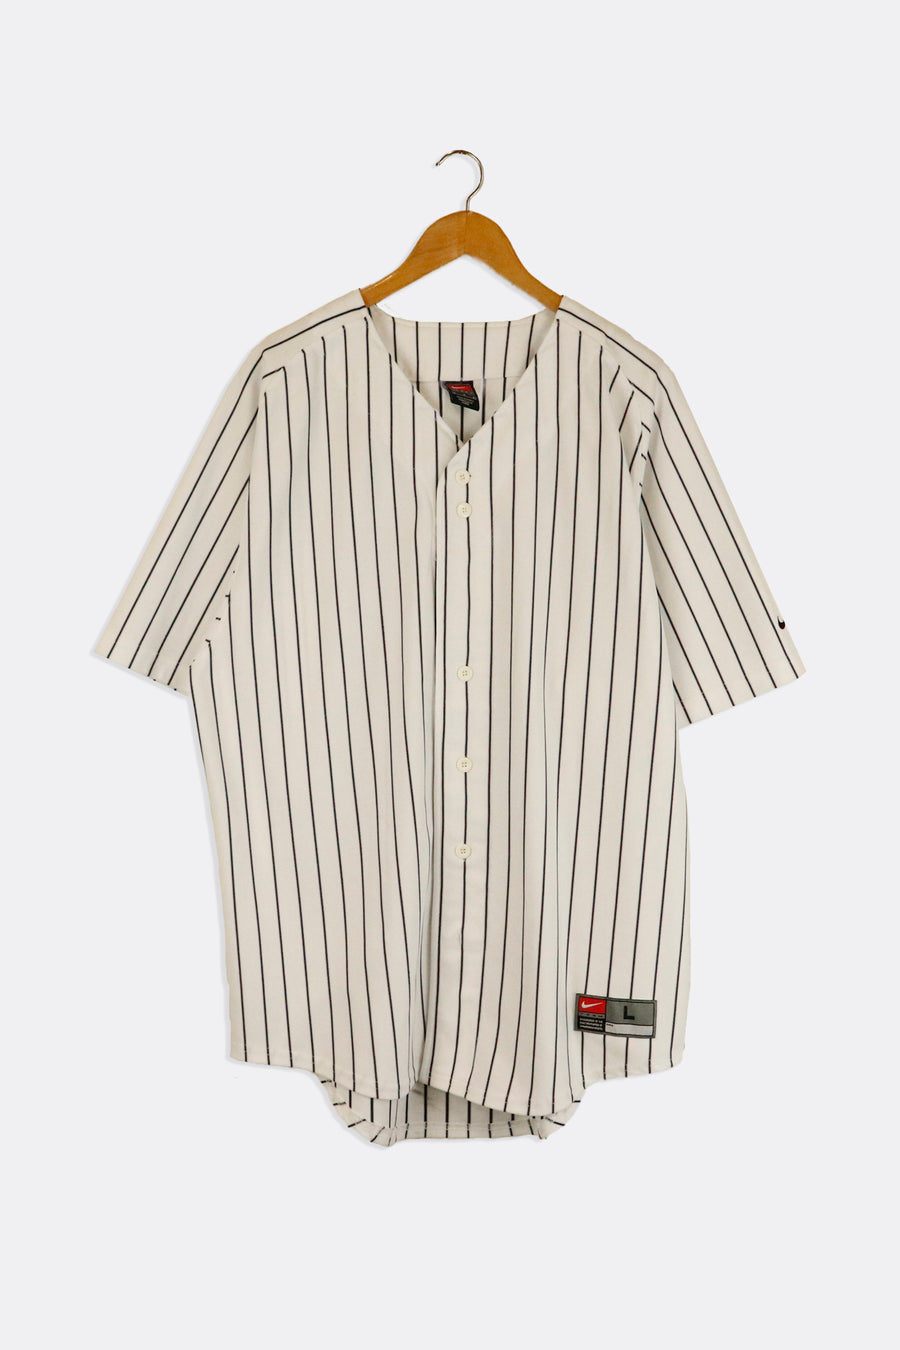 Vintage Nike Baseball Style Jersey Striped Black And White Outerwear Sz L